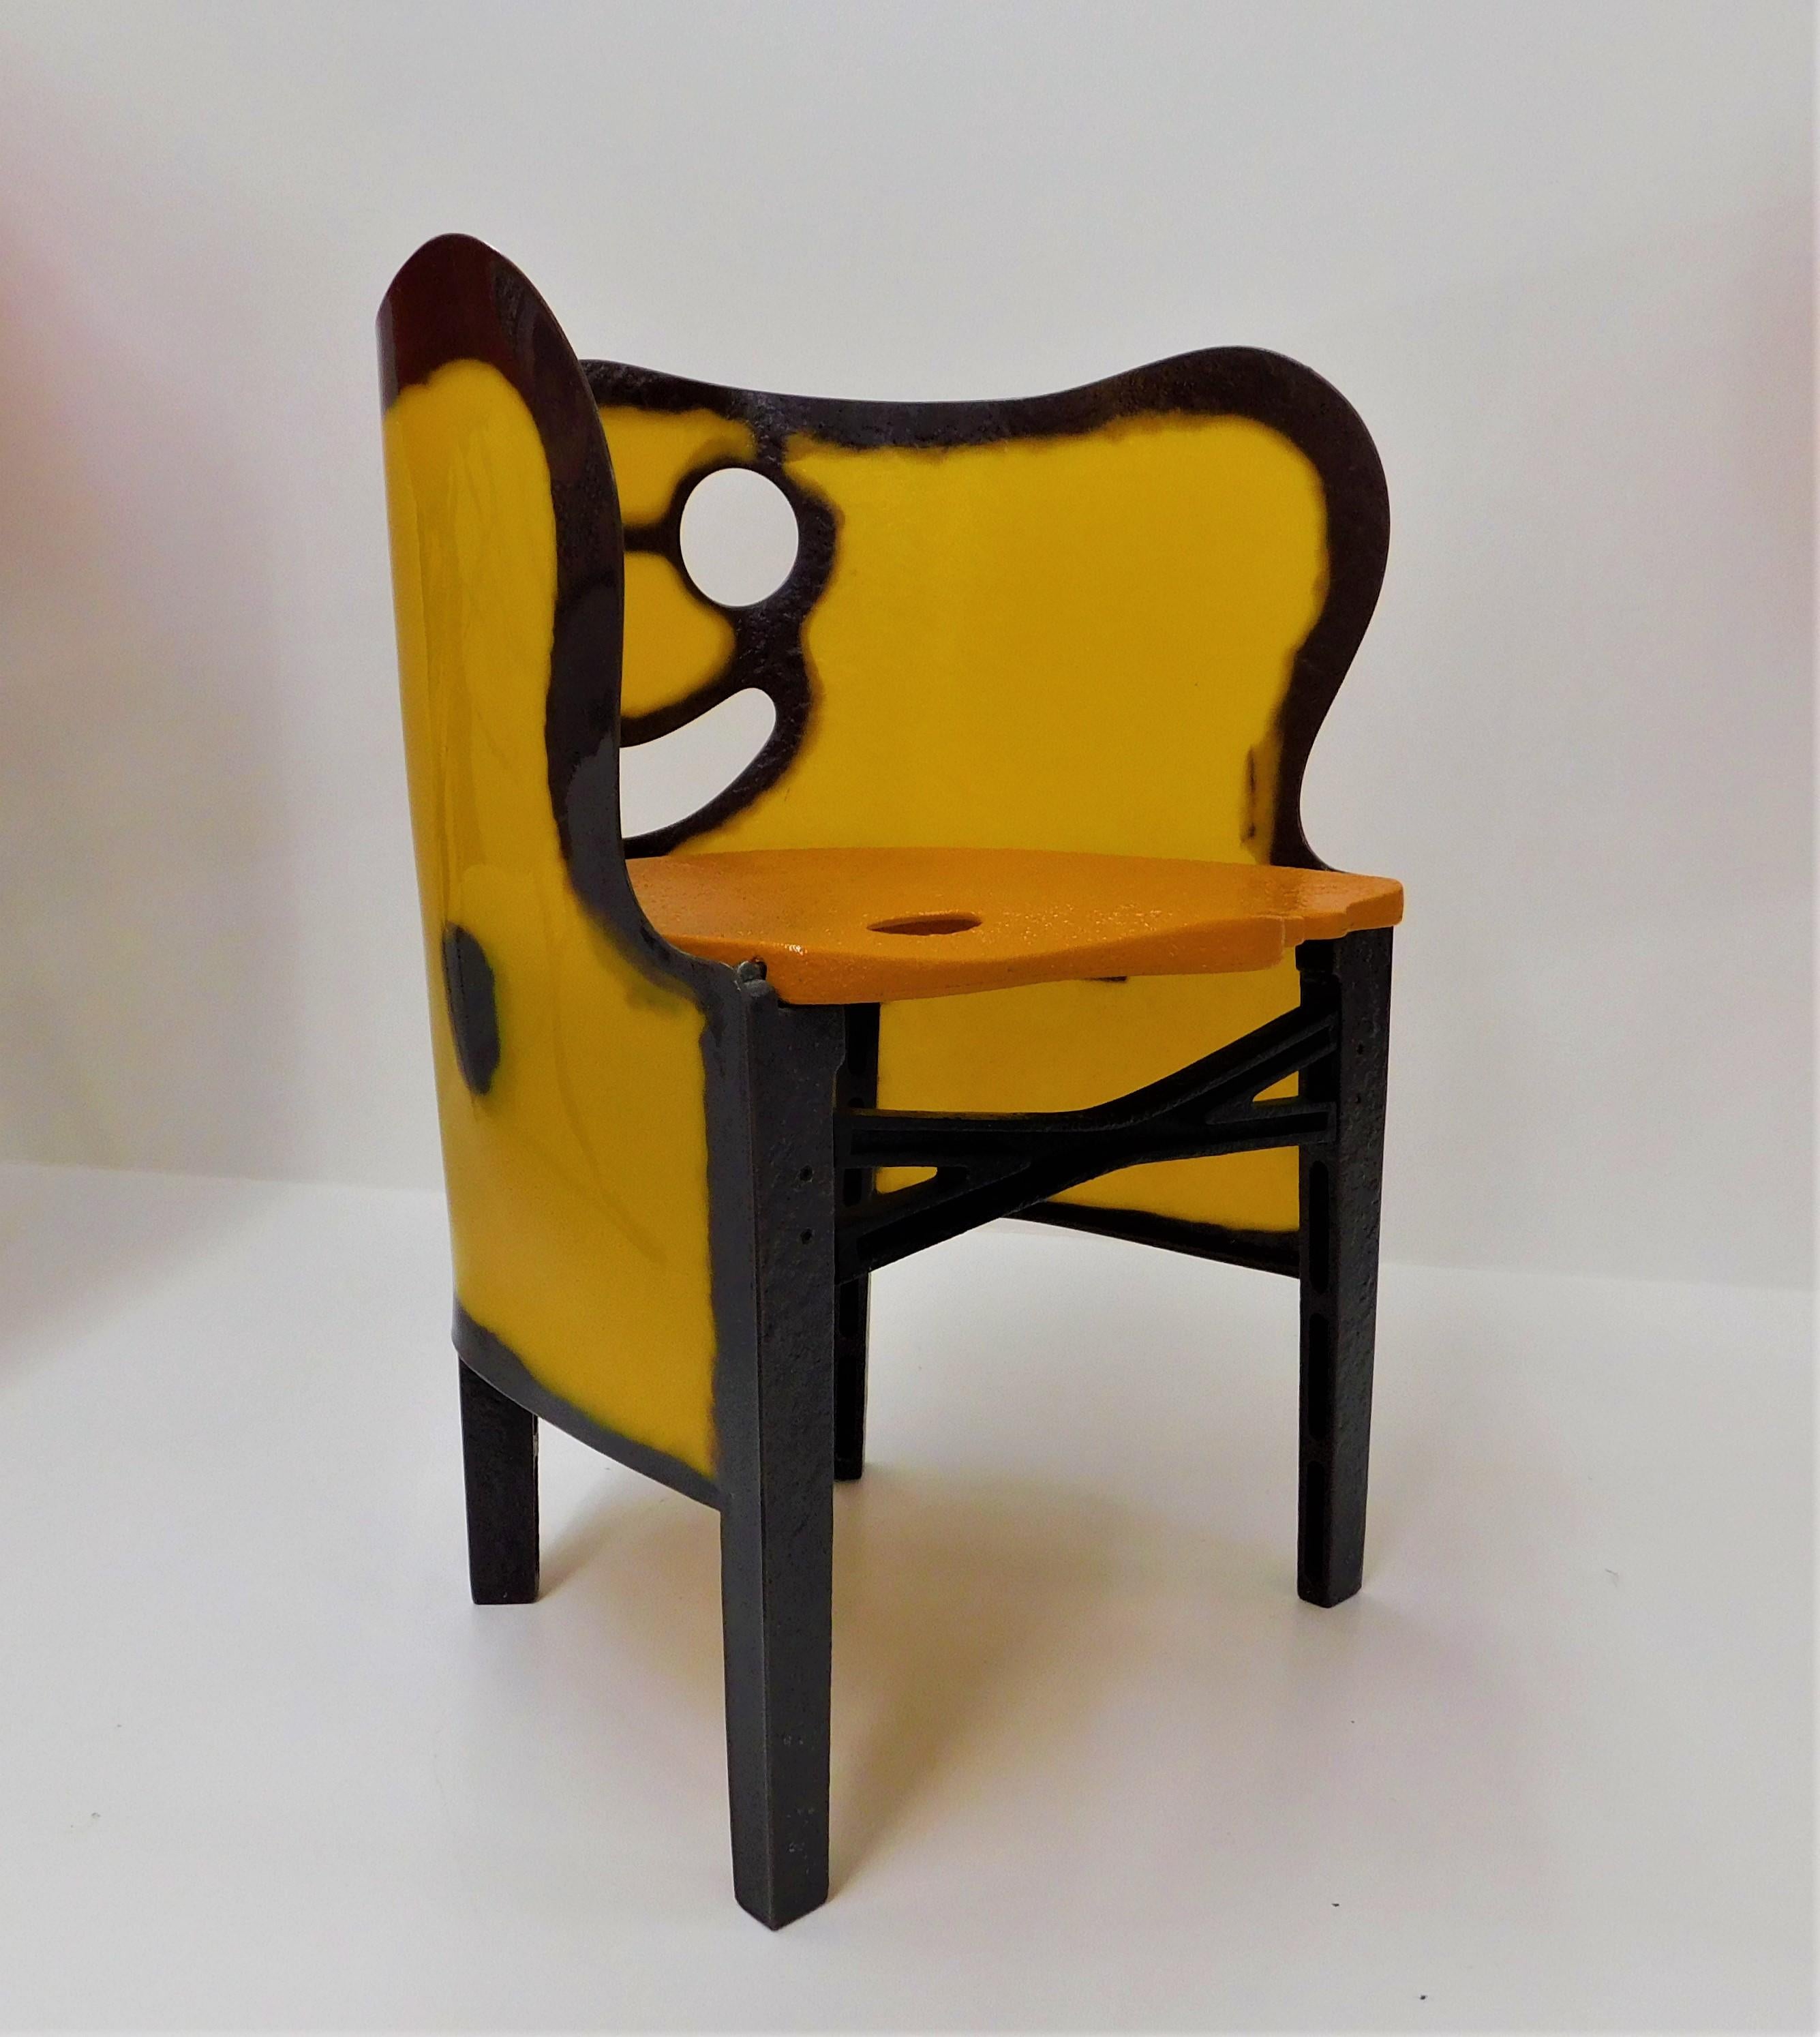 Post-Modern Gaetano Pesce Crosby Childs Chair Fish Design, New York